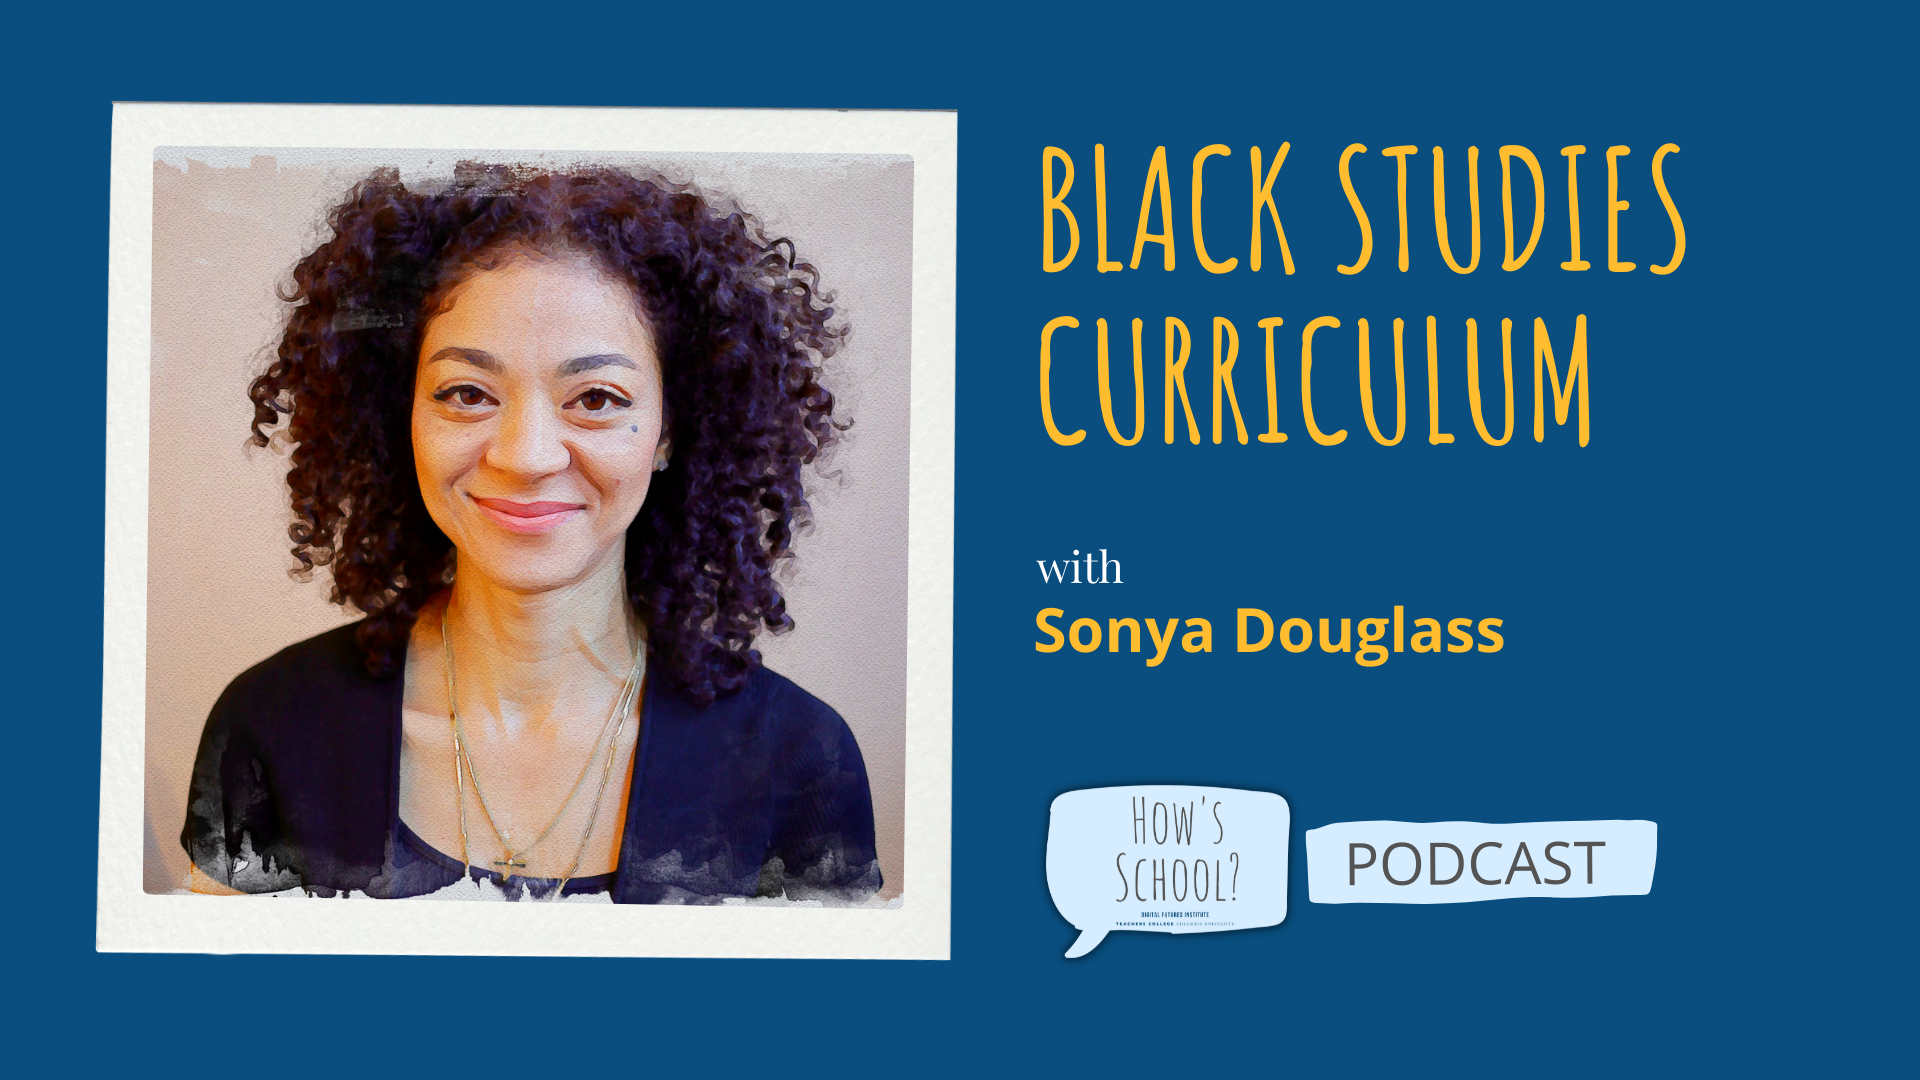 Black Studies Curriculum Episode Image with Sonya Douglass photo